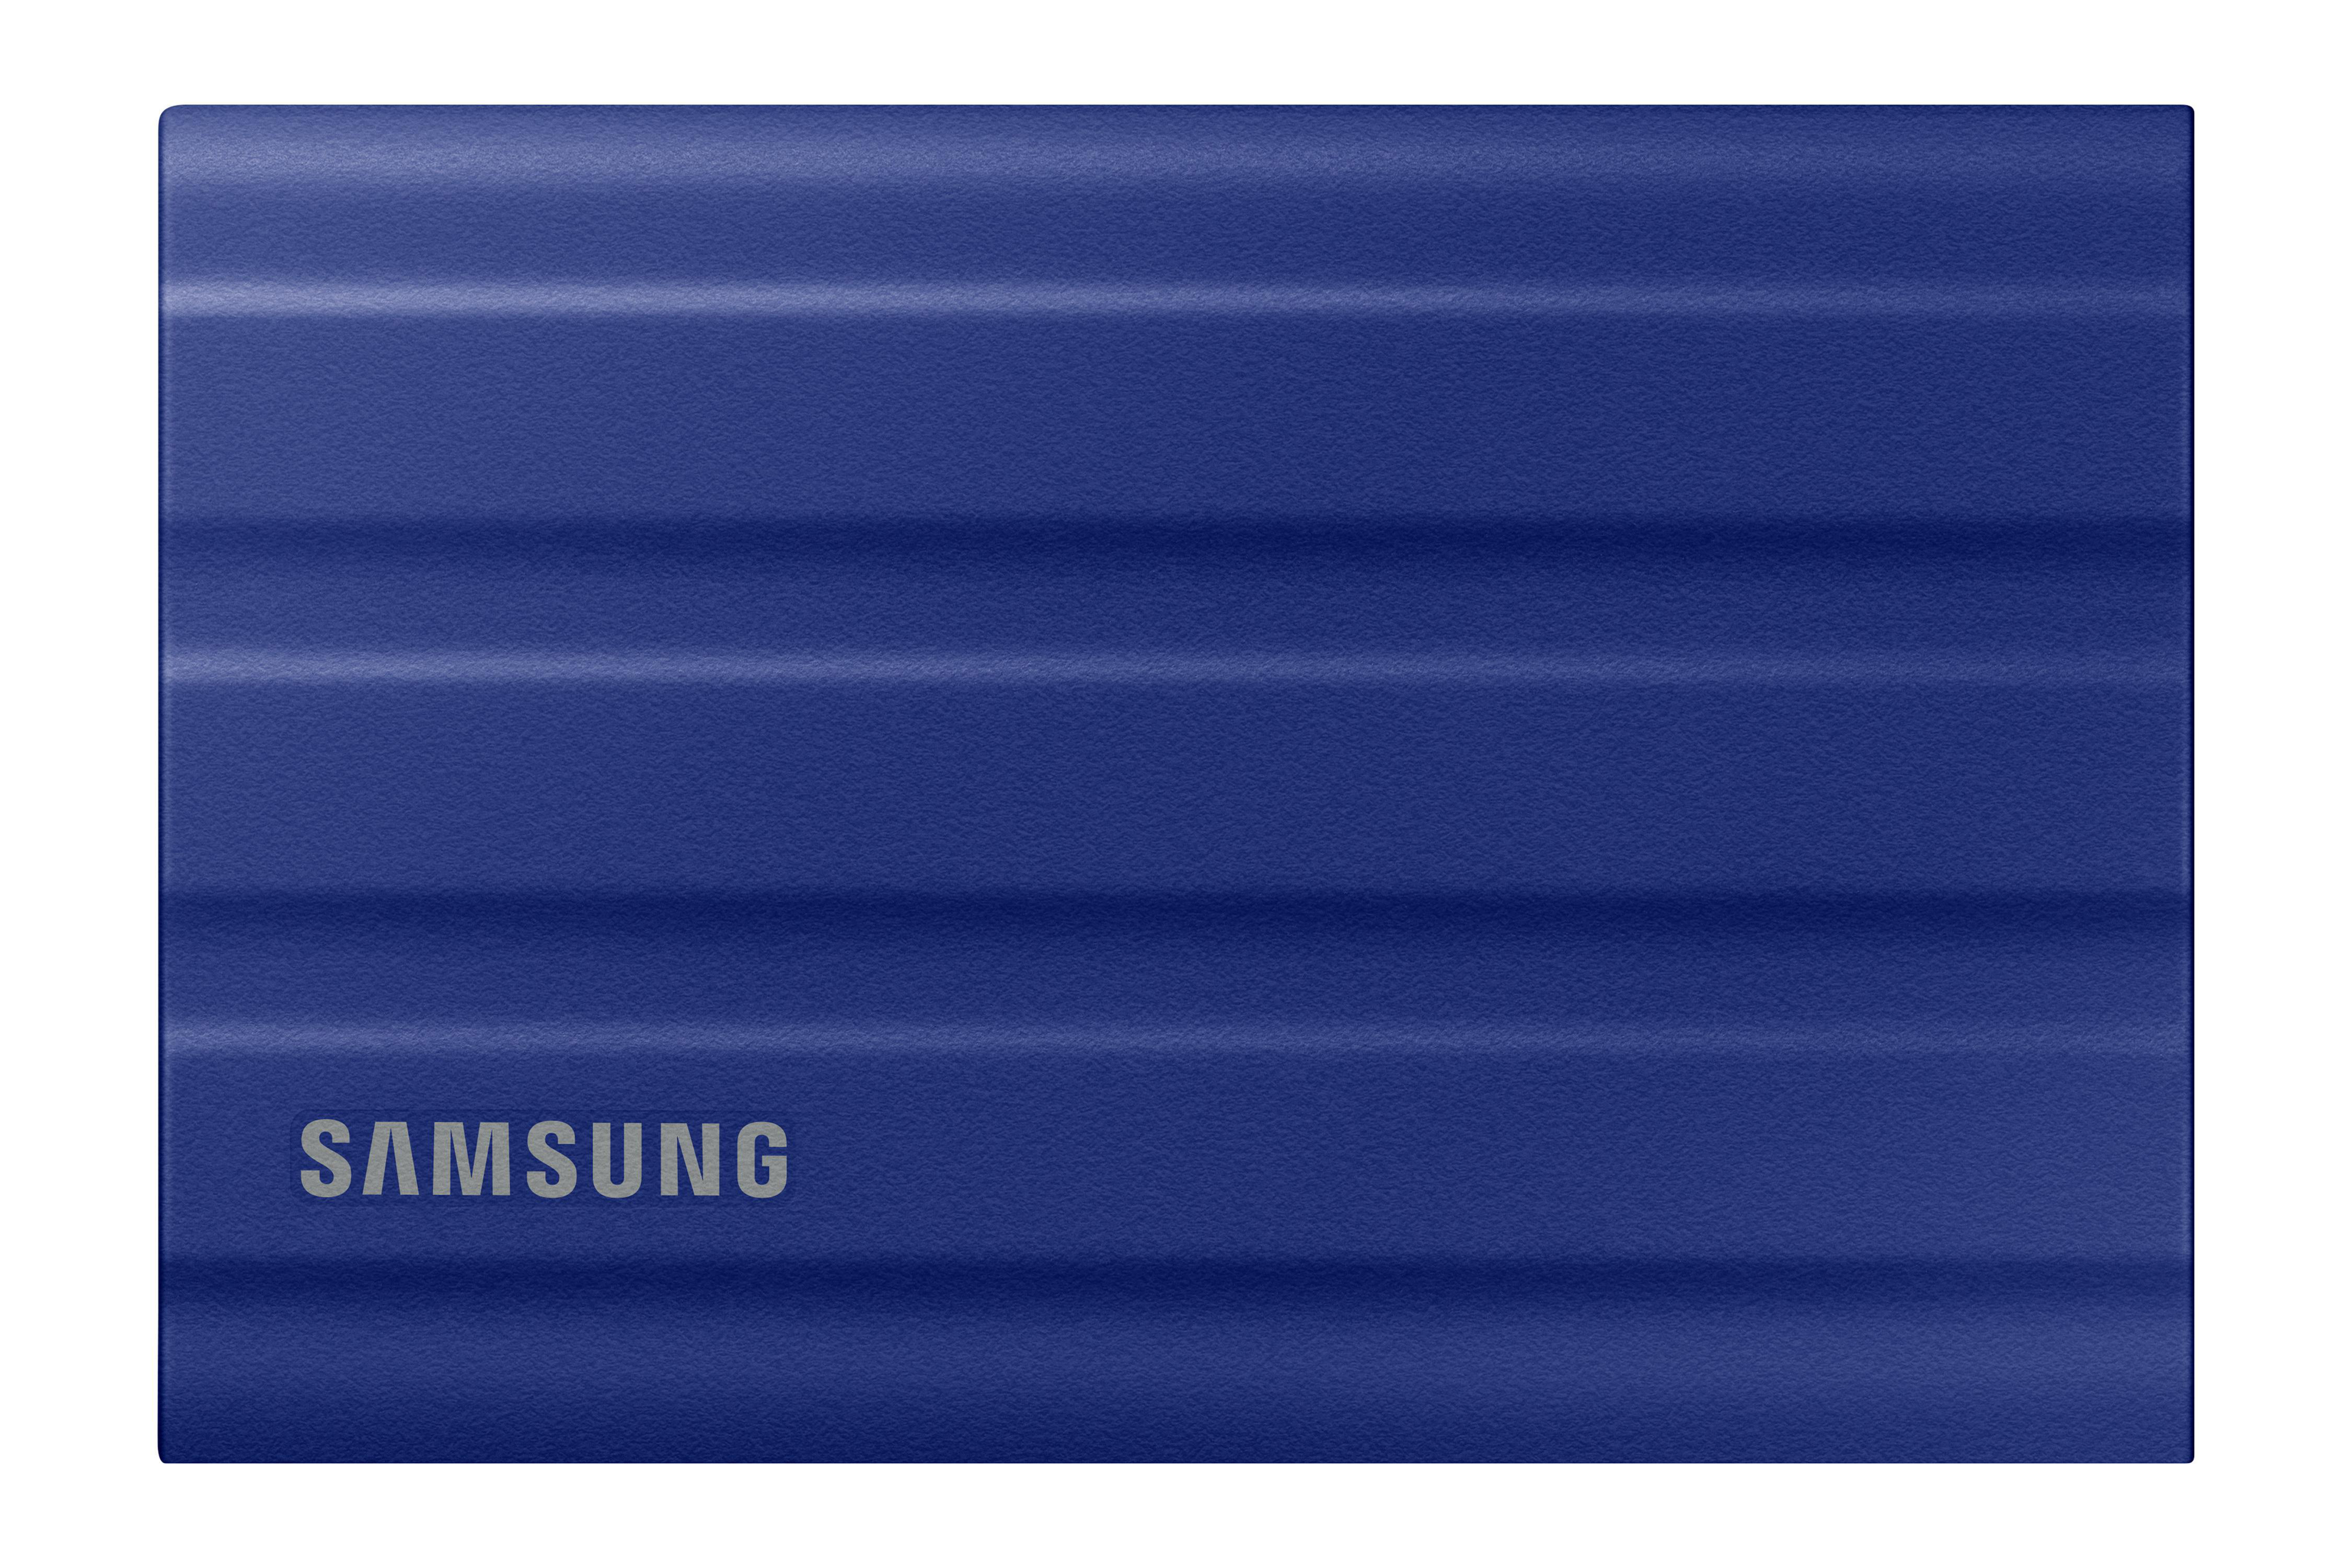 SAMSUNG Portable SSD T7 Shield extern, Blau PC/Mac TB 1 SSD, Festplatte